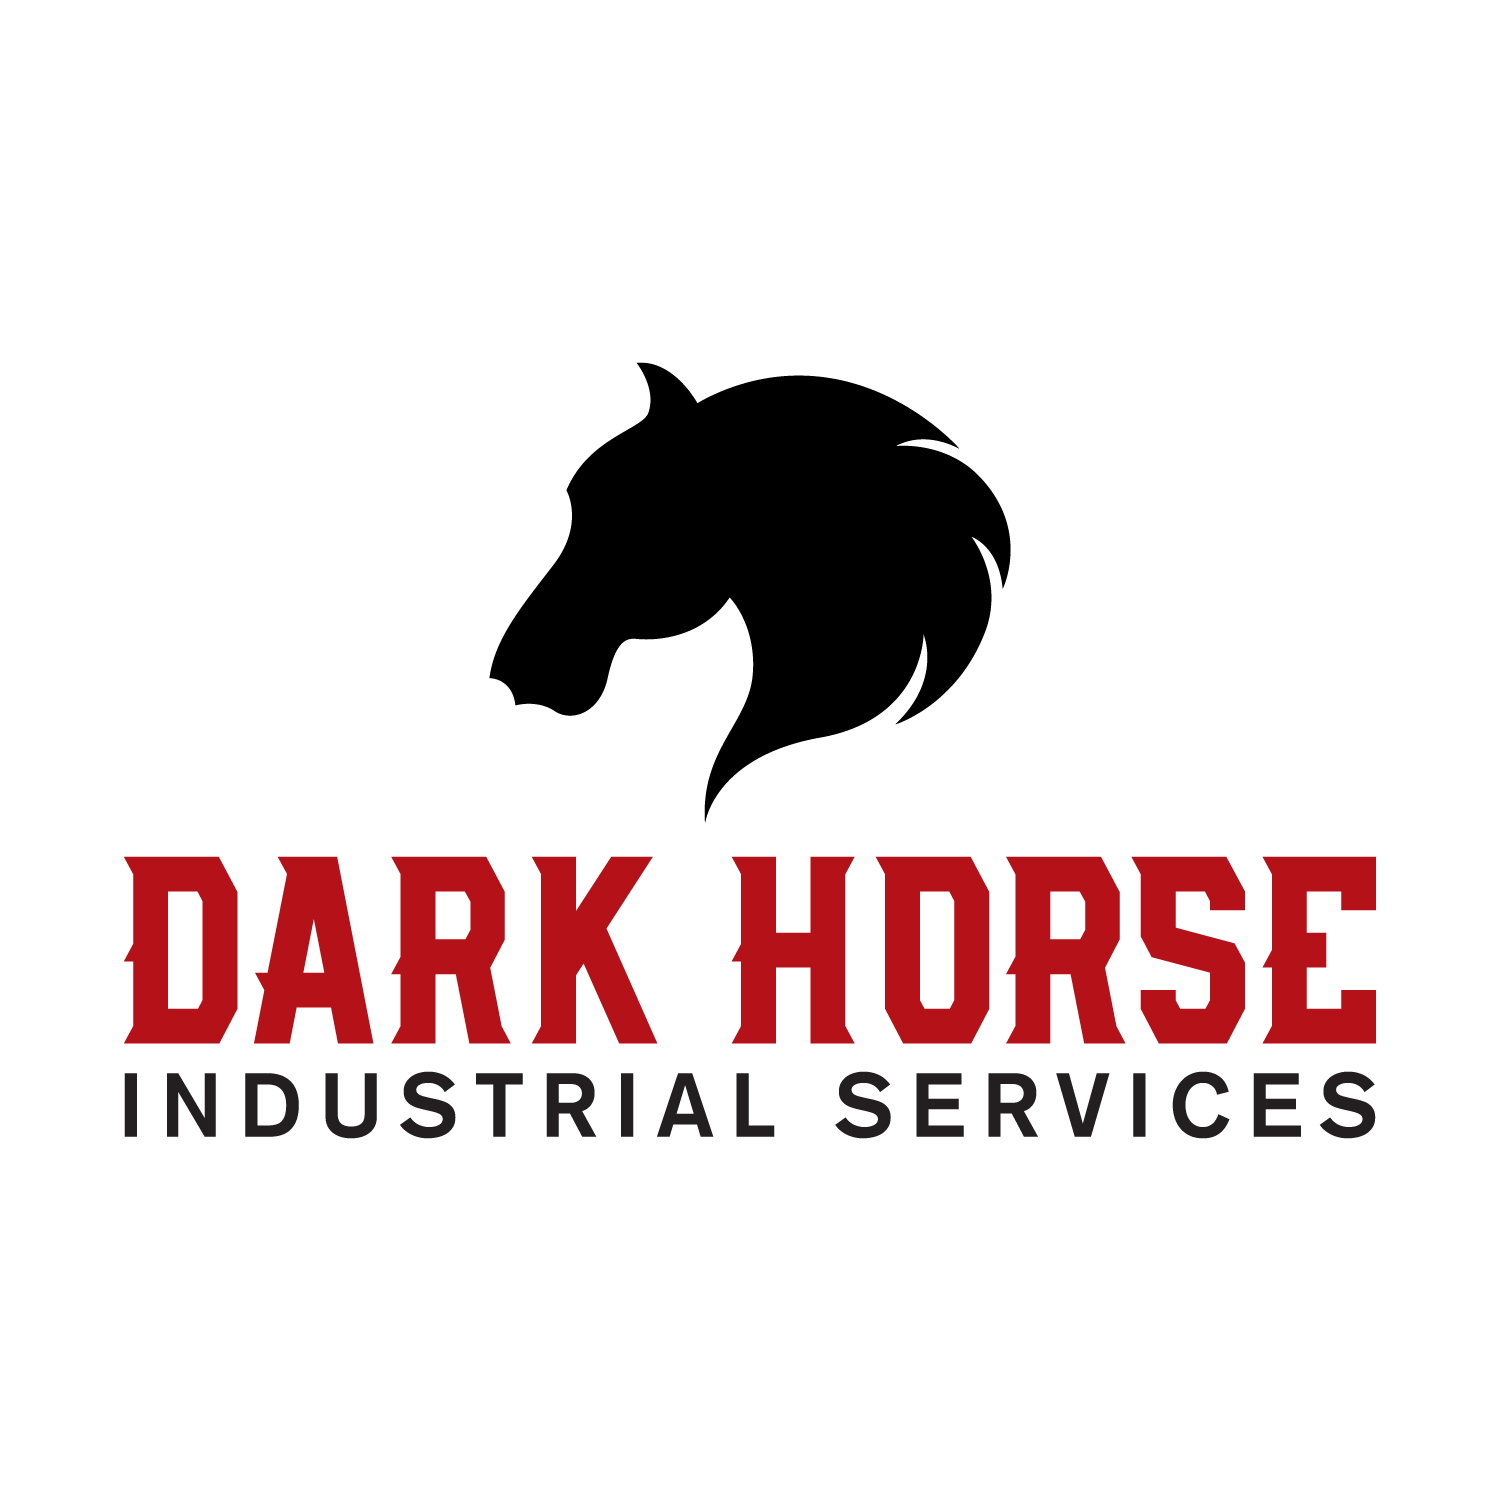 Dark Horse Industrial Services logo designed by C&B Marketing.